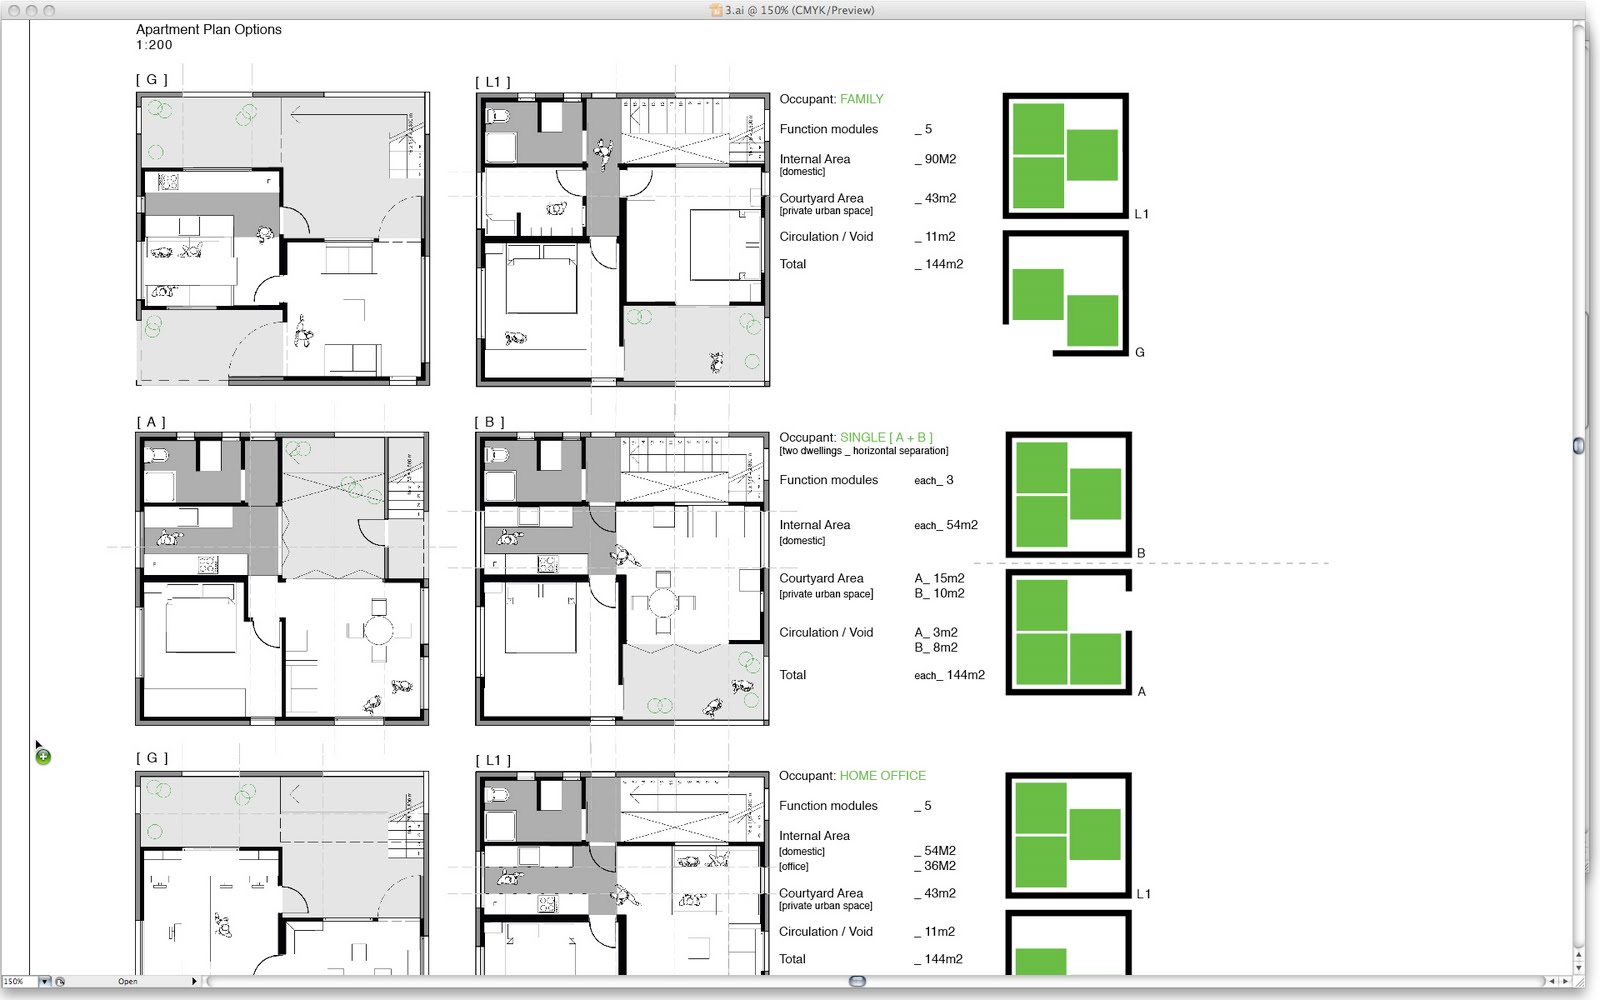 1 Bedroom Apartment Construction Plans